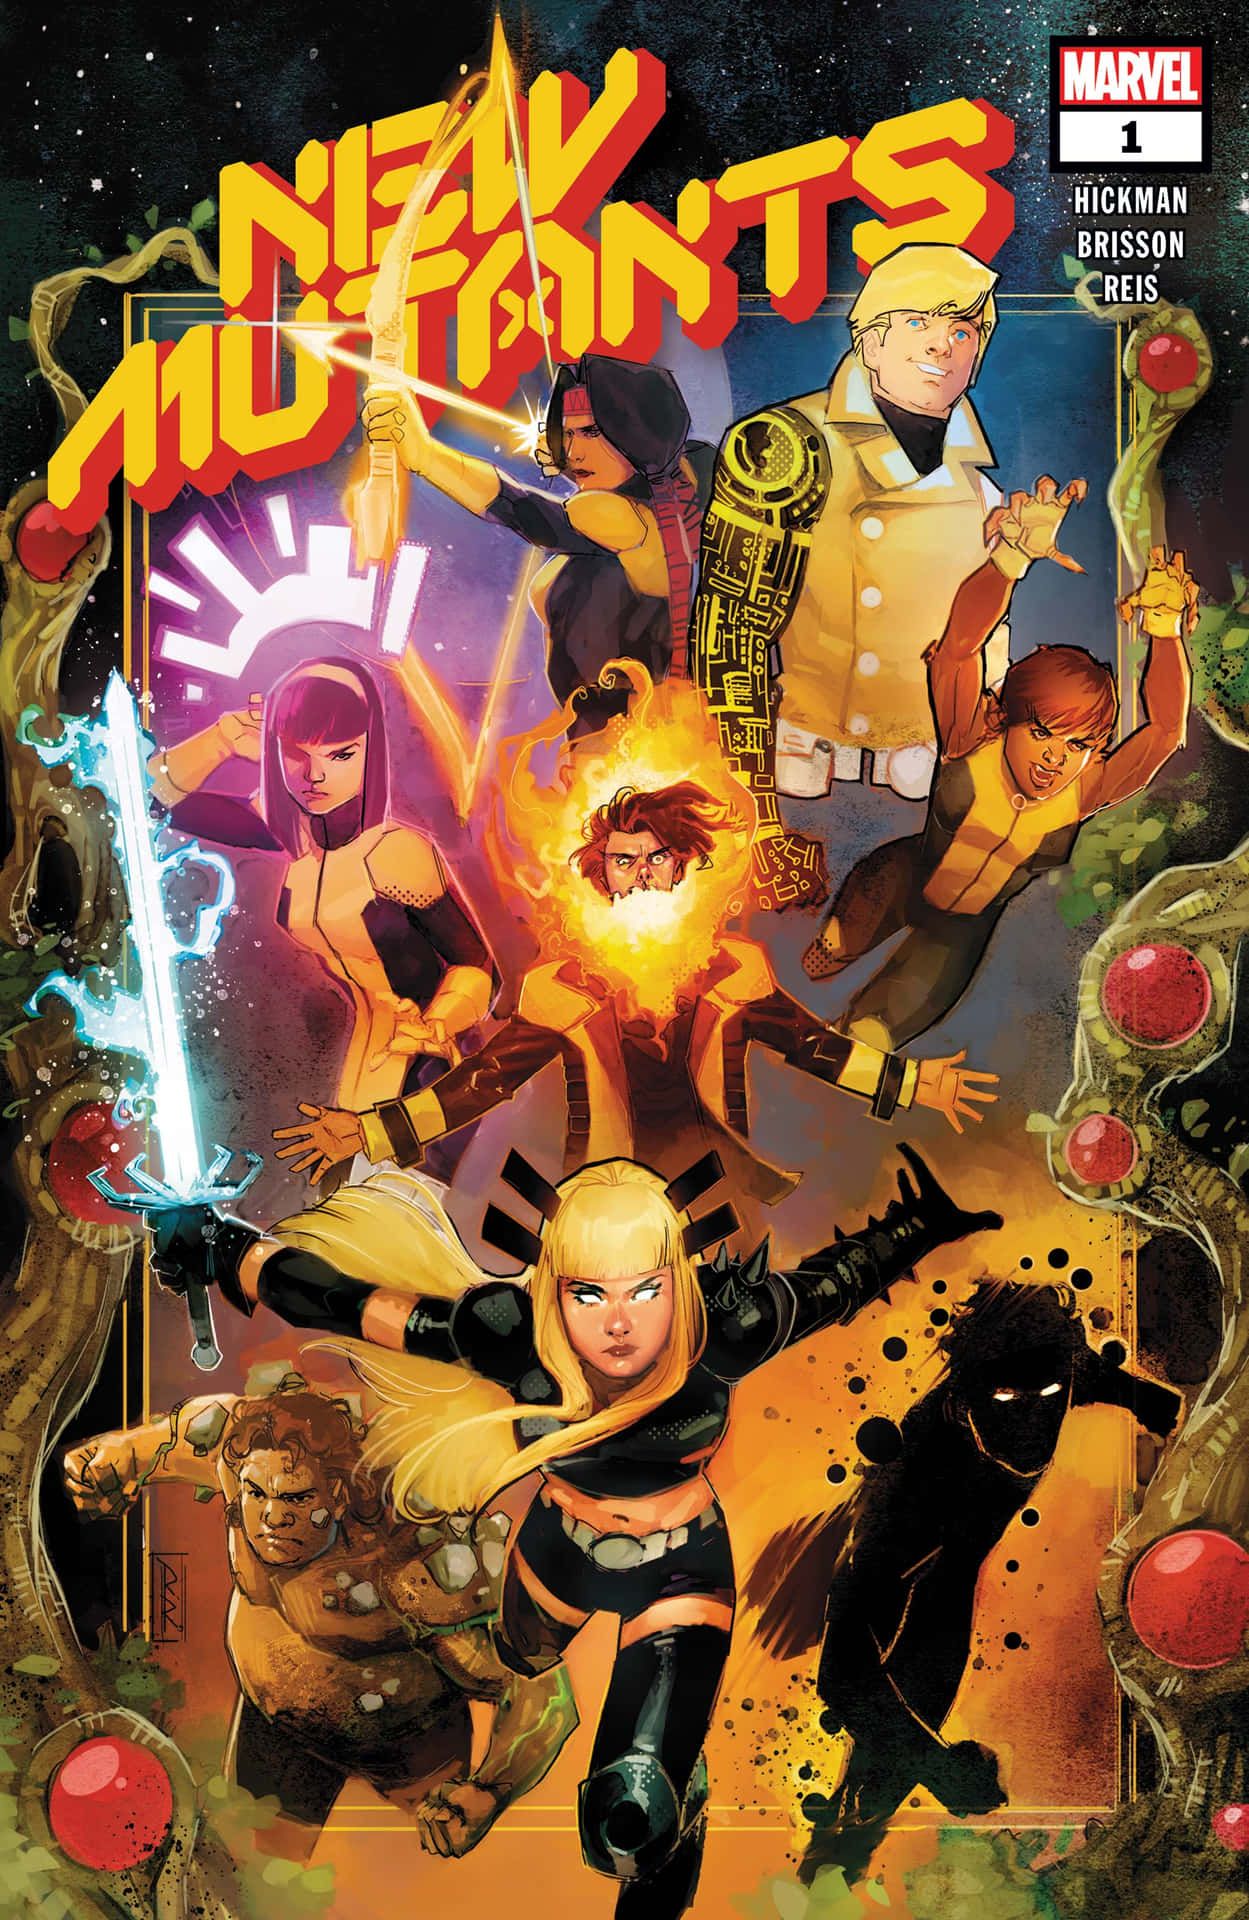 Mutant gathering in a hostile environment Wallpaper